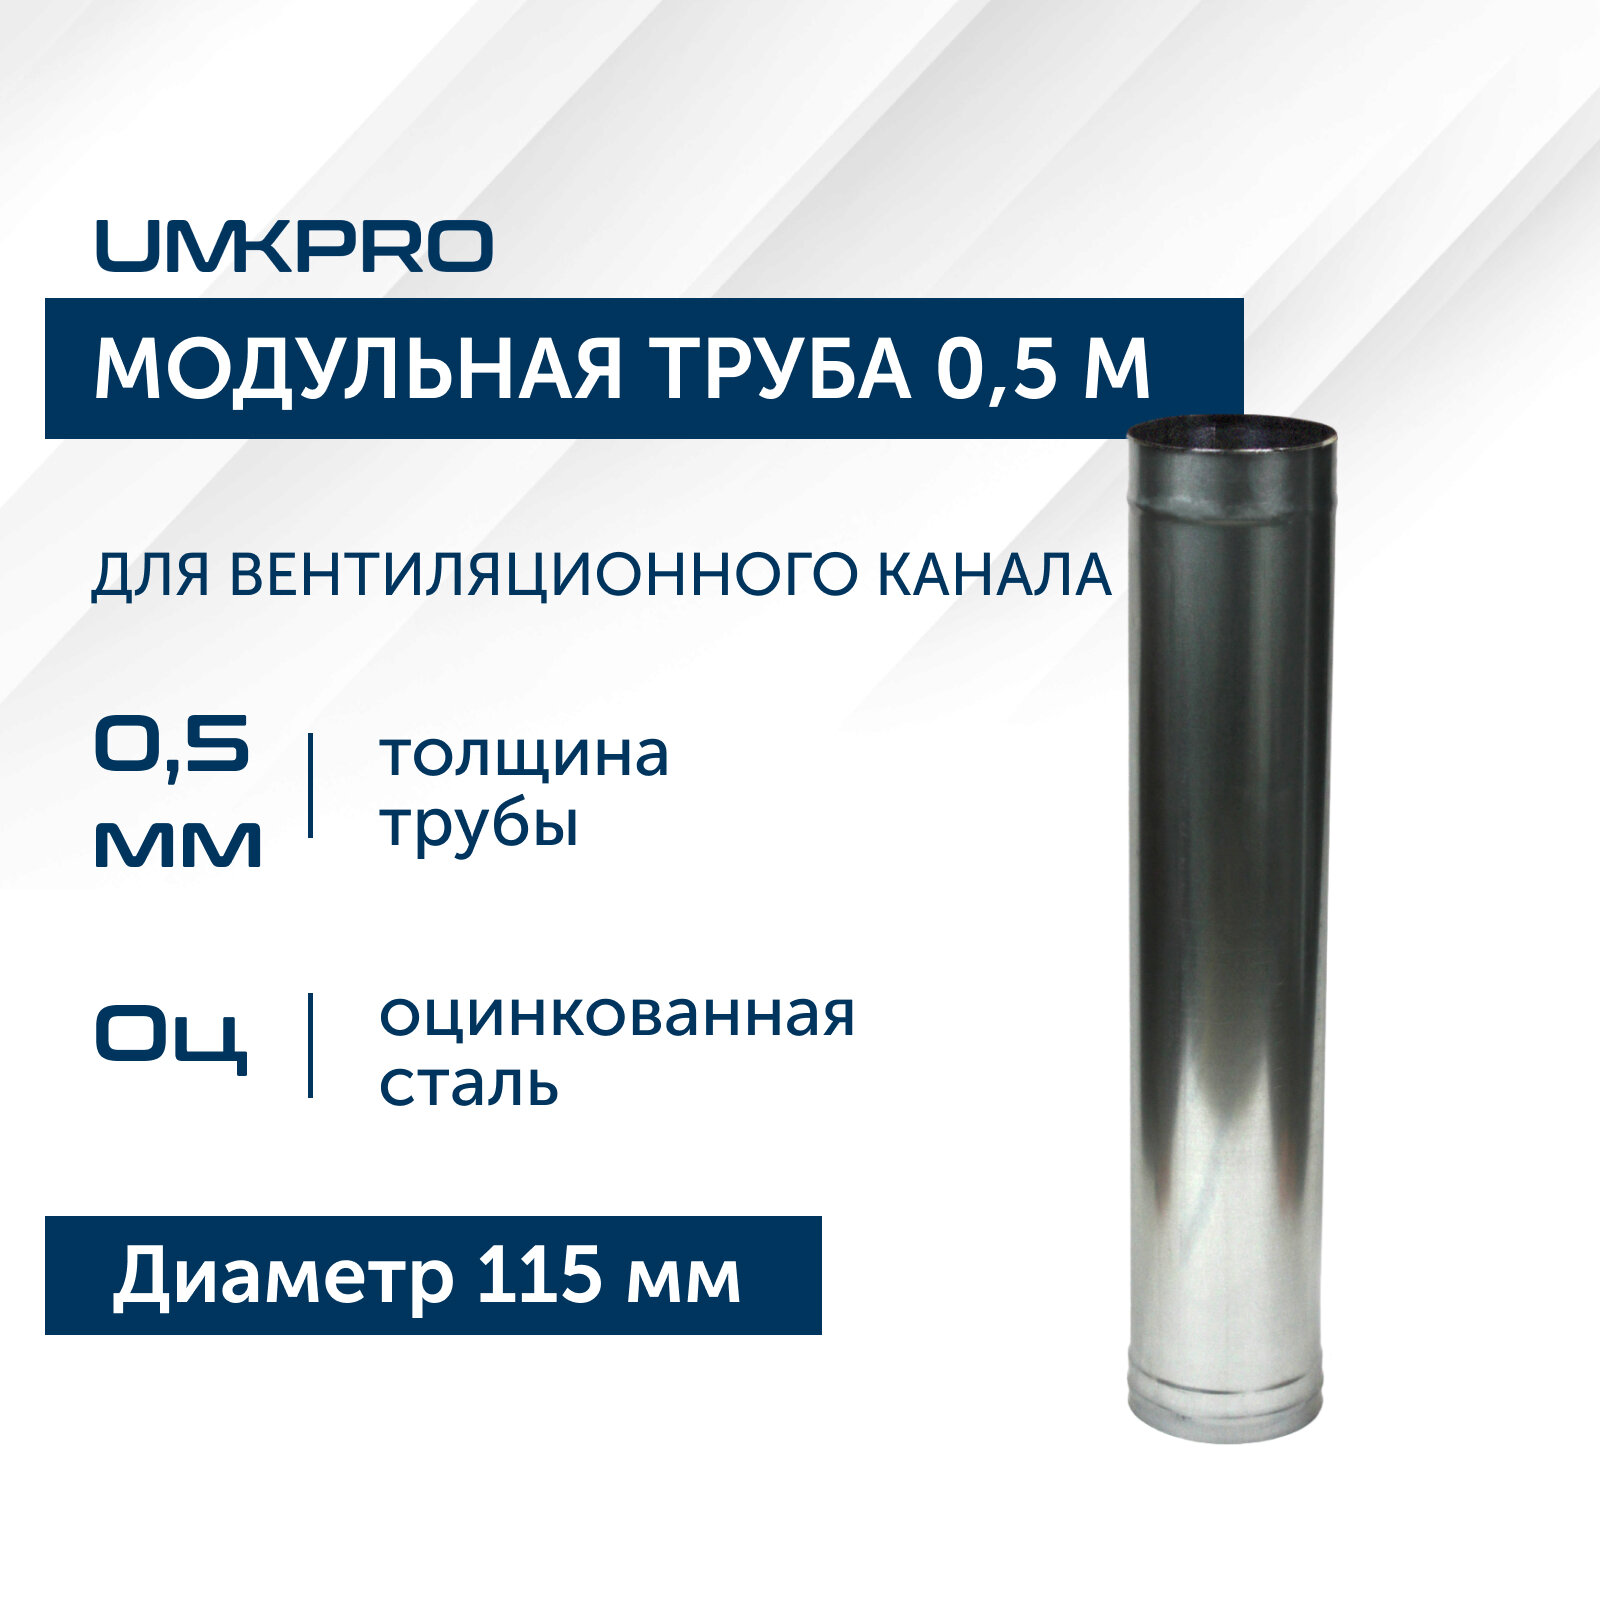 Труба модульная для дымохода 0,5 м UMKPRO, D 115, Оц/0,5мм